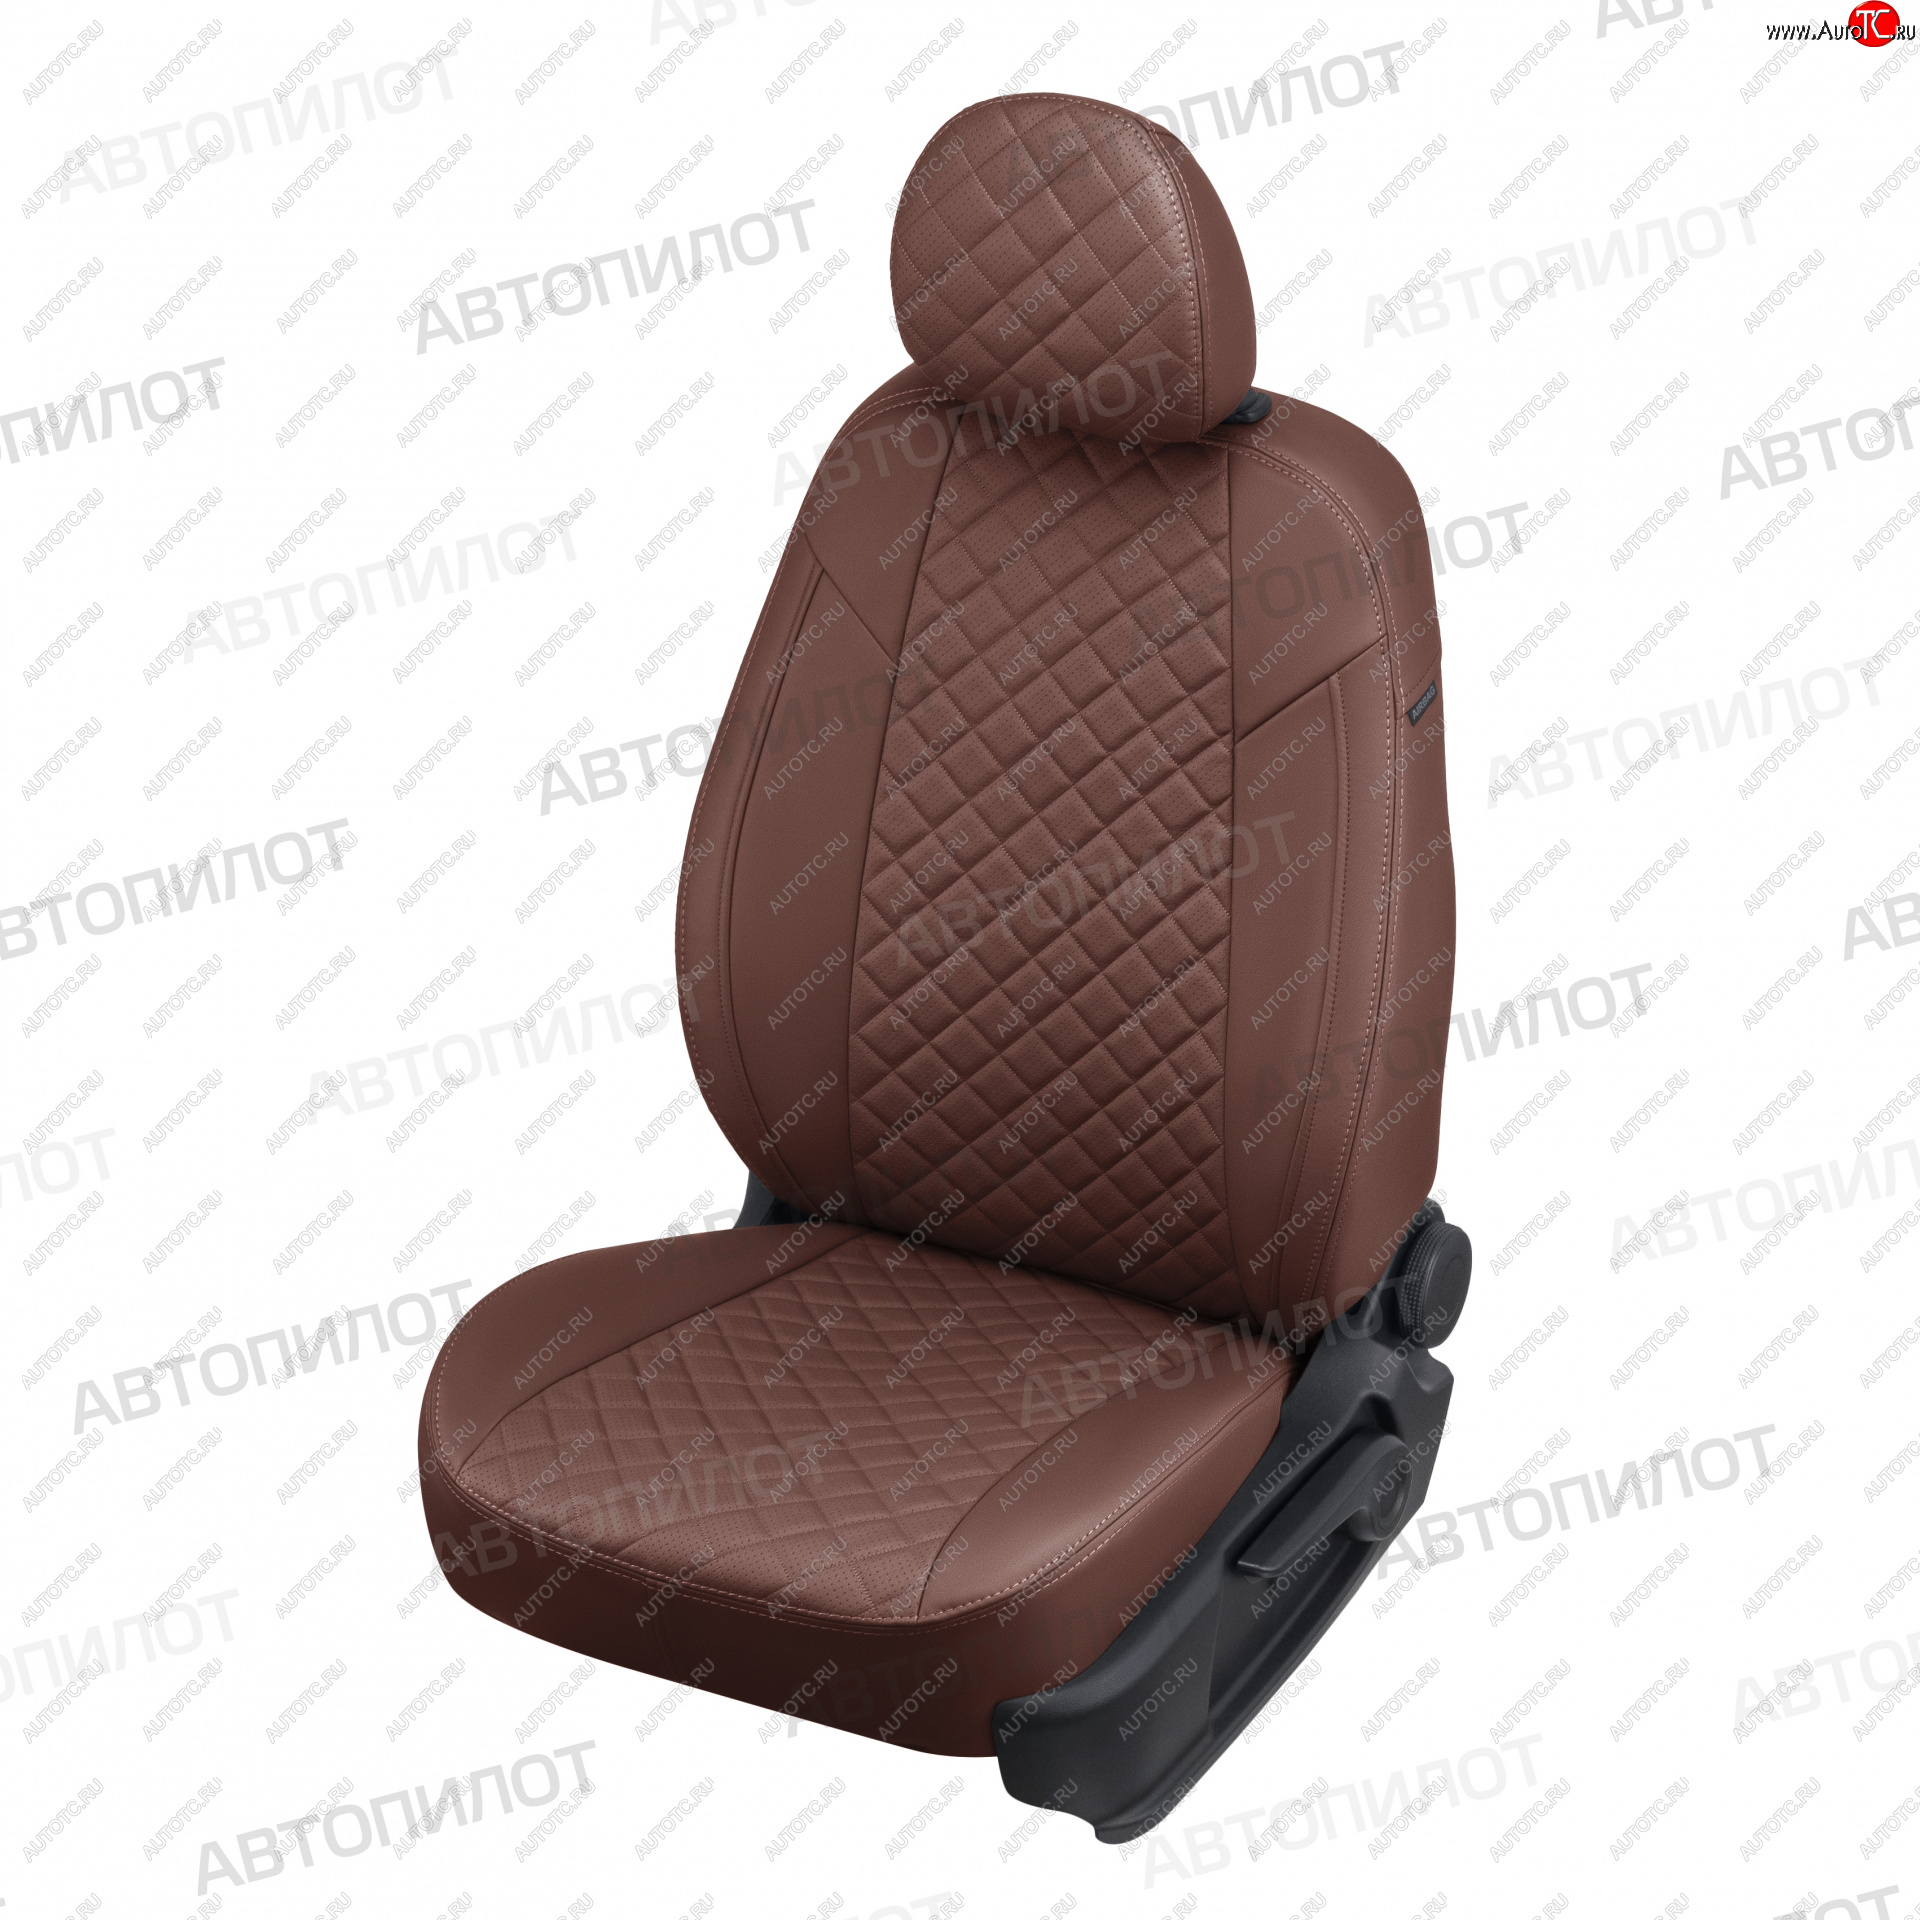 7 799 р. Чехлы сидений (экокожа) Автопилот Ромб  KIA Ceed  1 ED (2006-2012) (темно-коричневый)